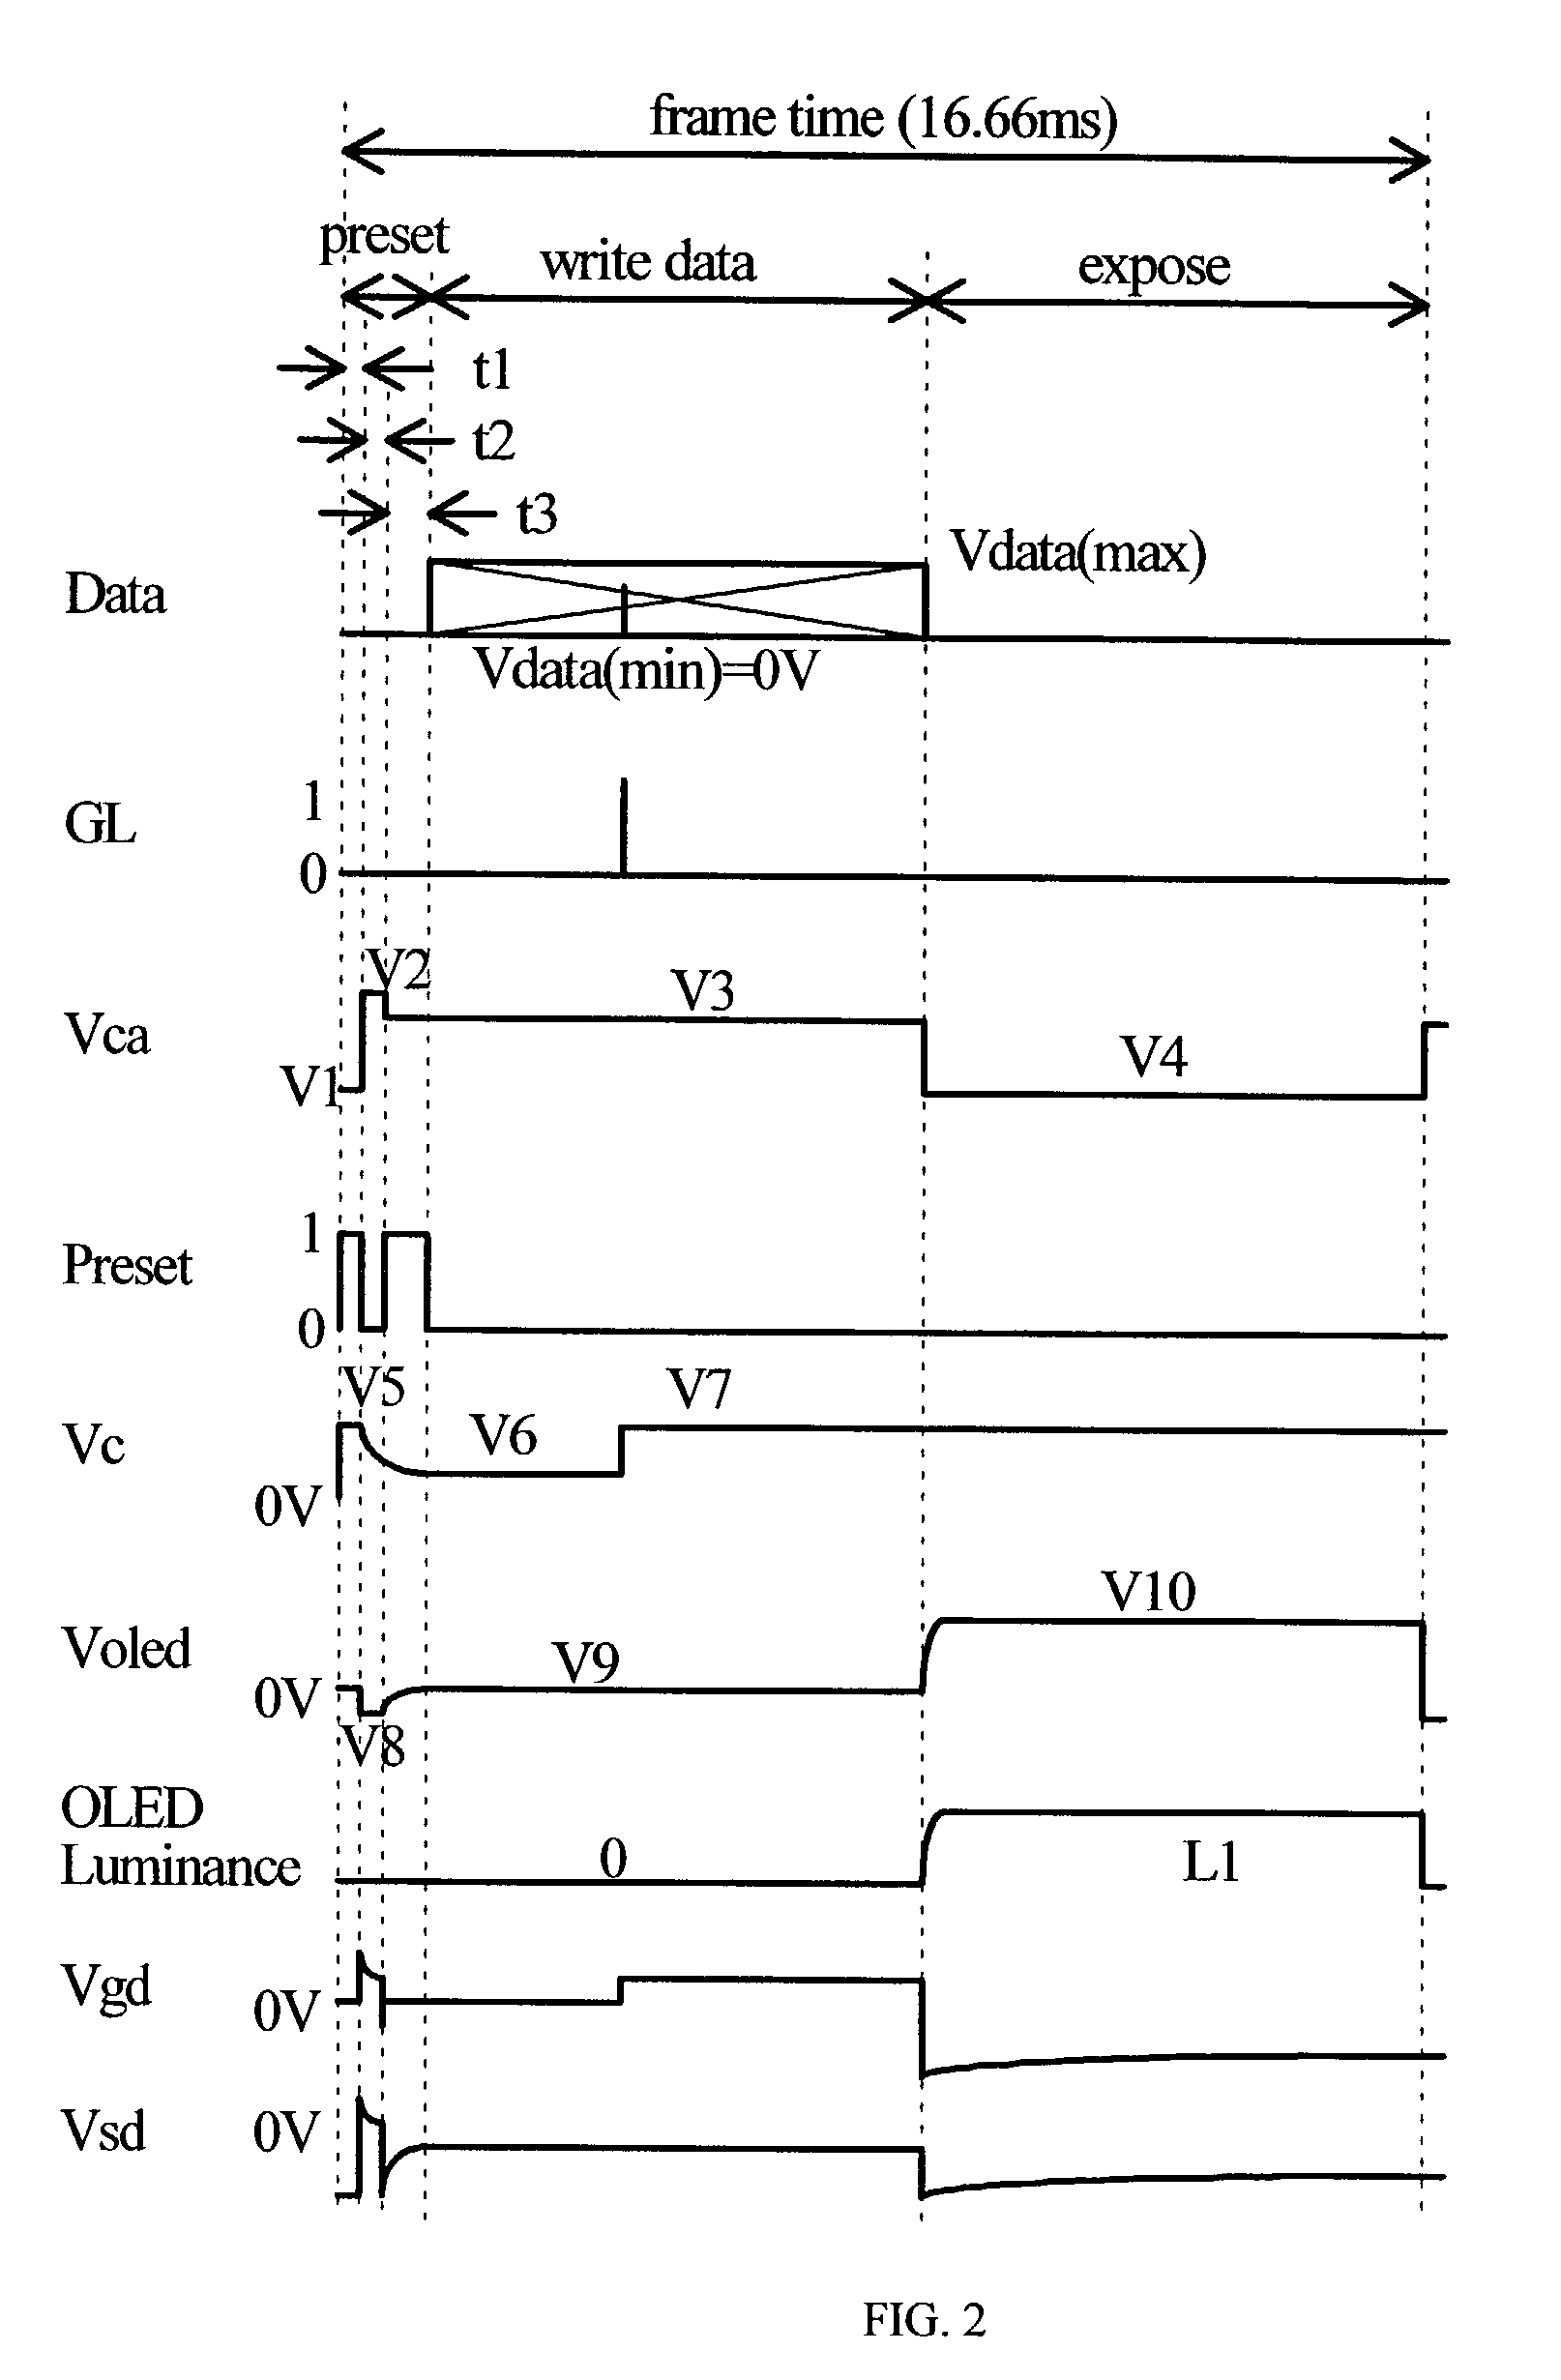 Data voltage current drive amoled pixel circuit